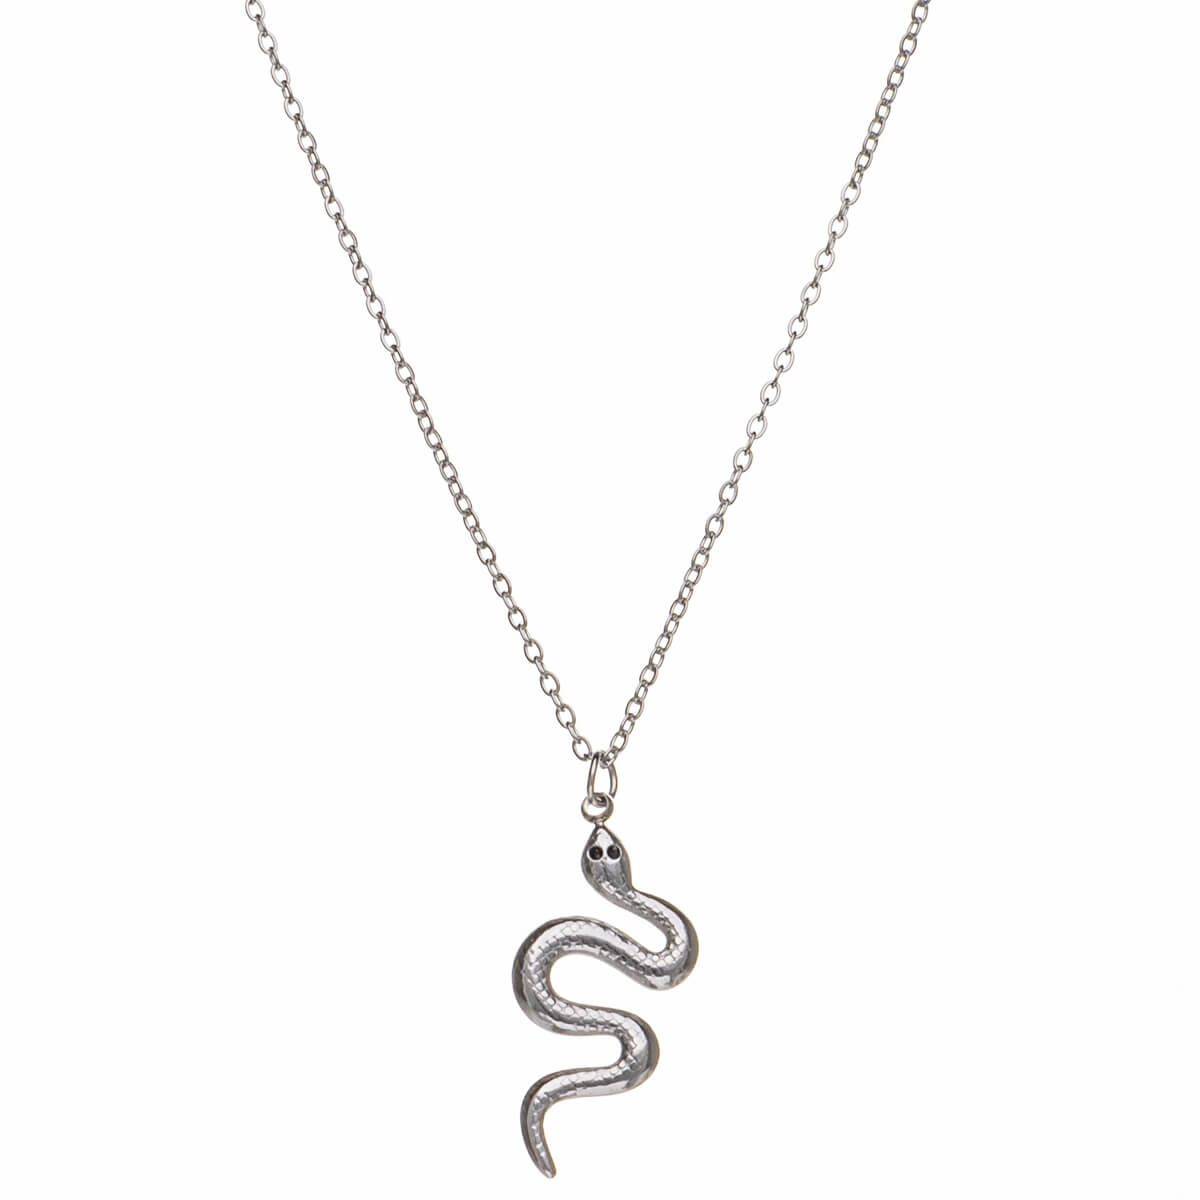 Steel snake pendant necklace 46cm +5cm (steel 316L)